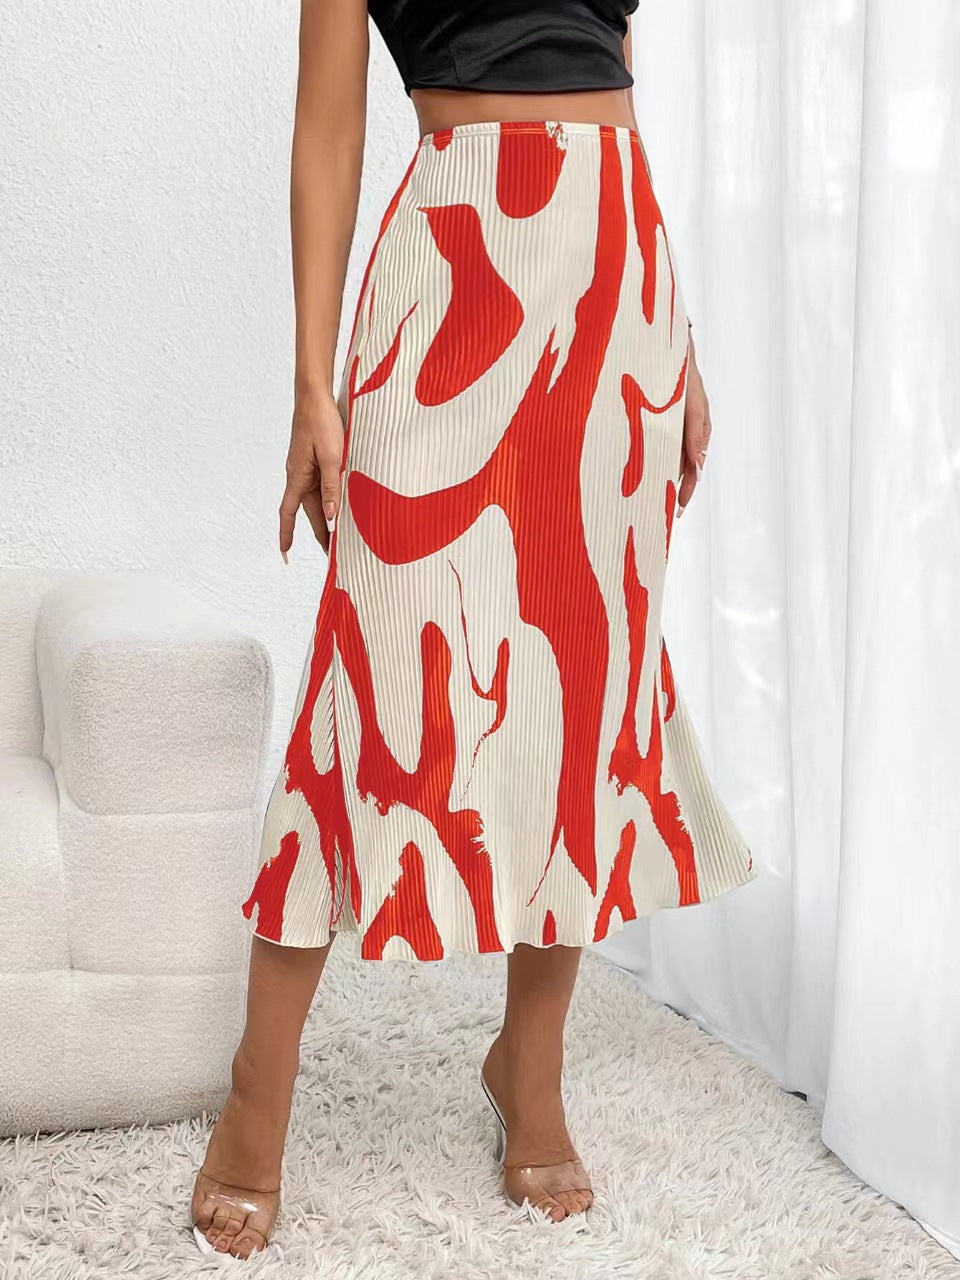 New Summer Printed Women's Skirt